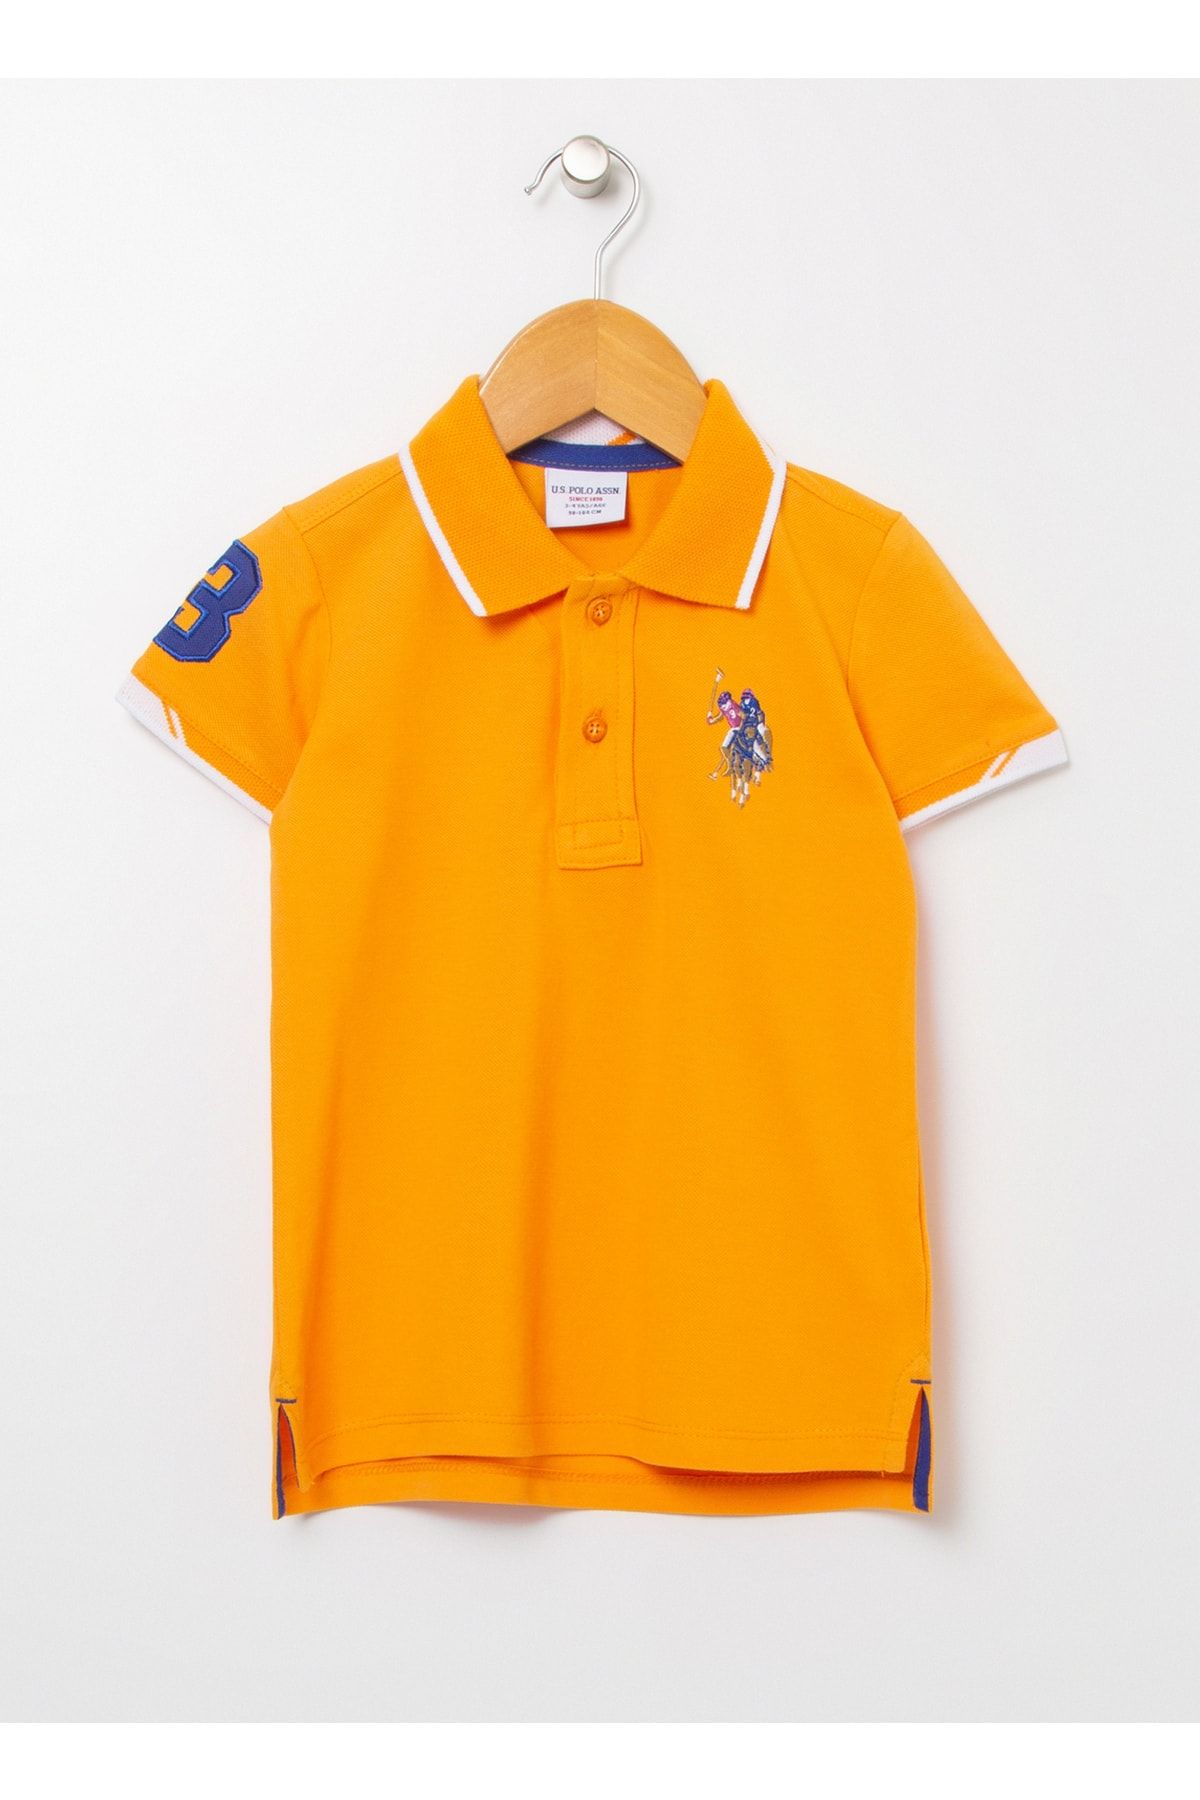 U.S. Polo Assn. تی شرت پولو پسرانه ساده Sd01kıdsıy022 Vr094